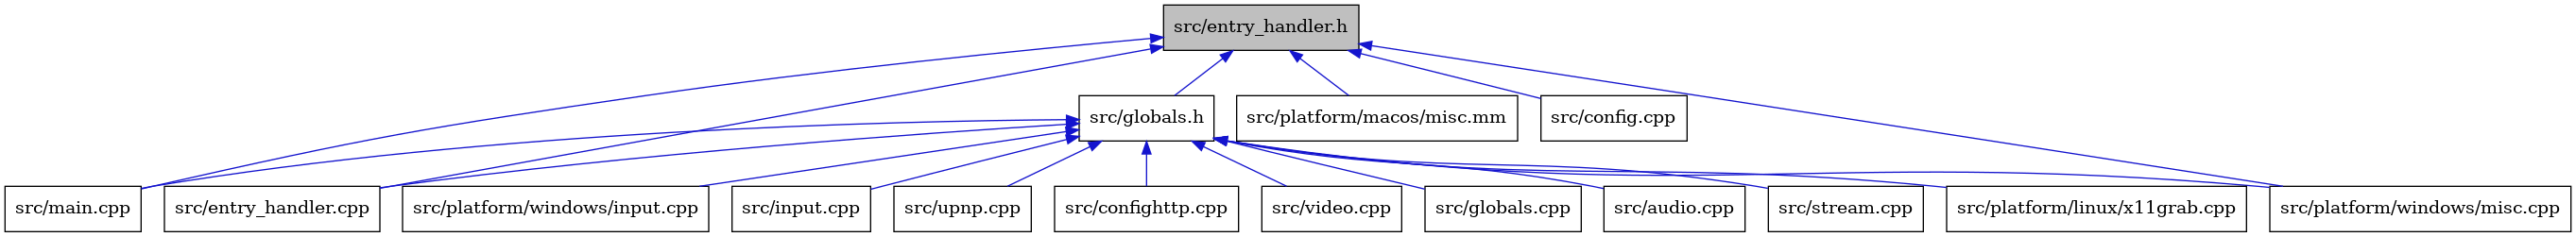 digraph {
    graph [bgcolor="#00000000"]
    node [shape=rectangle style=filled fillcolor="#FFFFFF" font=Helvetica padding=2]
    edge [color="#1414CE"]
    "8" [label="src/main.cpp" tooltip="src/main.cpp"]
    "11" [label="src/platform/windows/input.cpp" tooltip="src/platform/windows/input.cpp"]
    "9" [label="src/input.cpp" tooltip="src/input.cpp"]
    "3" [label="src/entry_handler.cpp" tooltip="src/entry_handler.cpp"]
    "16" [label="src/platform/macos/misc.mm" tooltip="src/platform/macos/misc.mm"]
    "4" [label="src/globals.h" tooltip="src/globals.h"]
    "2" [label="src/config.cpp" tooltip="src/config.cpp"]
    "14" [label="src/upnp.cpp" tooltip="src/upnp.cpp"]
    "12" [label="src/platform/windows/misc.cpp" tooltip="src/platform/windows/misc.cpp"]
    "6" [label="src/confighttp.cpp" tooltip="src/confighttp.cpp"]
    "15" [label="src/video.cpp" tooltip="src/video.cpp"]
    "7" [label="src/globals.cpp" tooltip="src/globals.cpp"]
    "1" [label="src/entry_handler.h" tooltip="src/entry_handler.h" fillcolor="#BFBFBF"]
    "5" [label="src/audio.cpp" tooltip="src/audio.cpp"]
    "13" [label="src/stream.cpp" tooltip="src/stream.cpp"]
    "10" [label="src/platform/linux/x11grab.cpp" tooltip="src/platform/linux/x11grab.cpp"]
    "4" -> "5" [dir=back tooltip="include"]
    "4" -> "6" [dir=back tooltip="include"]
    "4" -> "3" [dir=back tooltip="include"]
    "4" -> "7" [dir=back tooltip="include"]
    "4" -> "8" [dir=back tooltip="include"]
    "4" -> "9" [dir=back tooltip="include"]
    "4" -> "10" [dir=back tooltip="include"]
    "4" -> "11" [dir=back tooltip="include"]
    "4" -> "12" [dir=back tooltip="include"]
    "4" -> "13" [dir=back tooltip="include"]
    "4" -> "14" [dir=back tooltip="include"]
    "4" -> "15" [dir=back tooltip="include"]
    "1" -> "2" [dir=back tooltip="include"]
    "1" -> "3" [dir=back tooltip="include"]
    "1" -> "4" [dir=back tooltip="include"]
    "1" -> "8" [dir=back tooltip="include"]
    "1" -> "16" [dir=back tooltip="include"]
    "1" -> "12" [dir=back tooltip="include"]
}